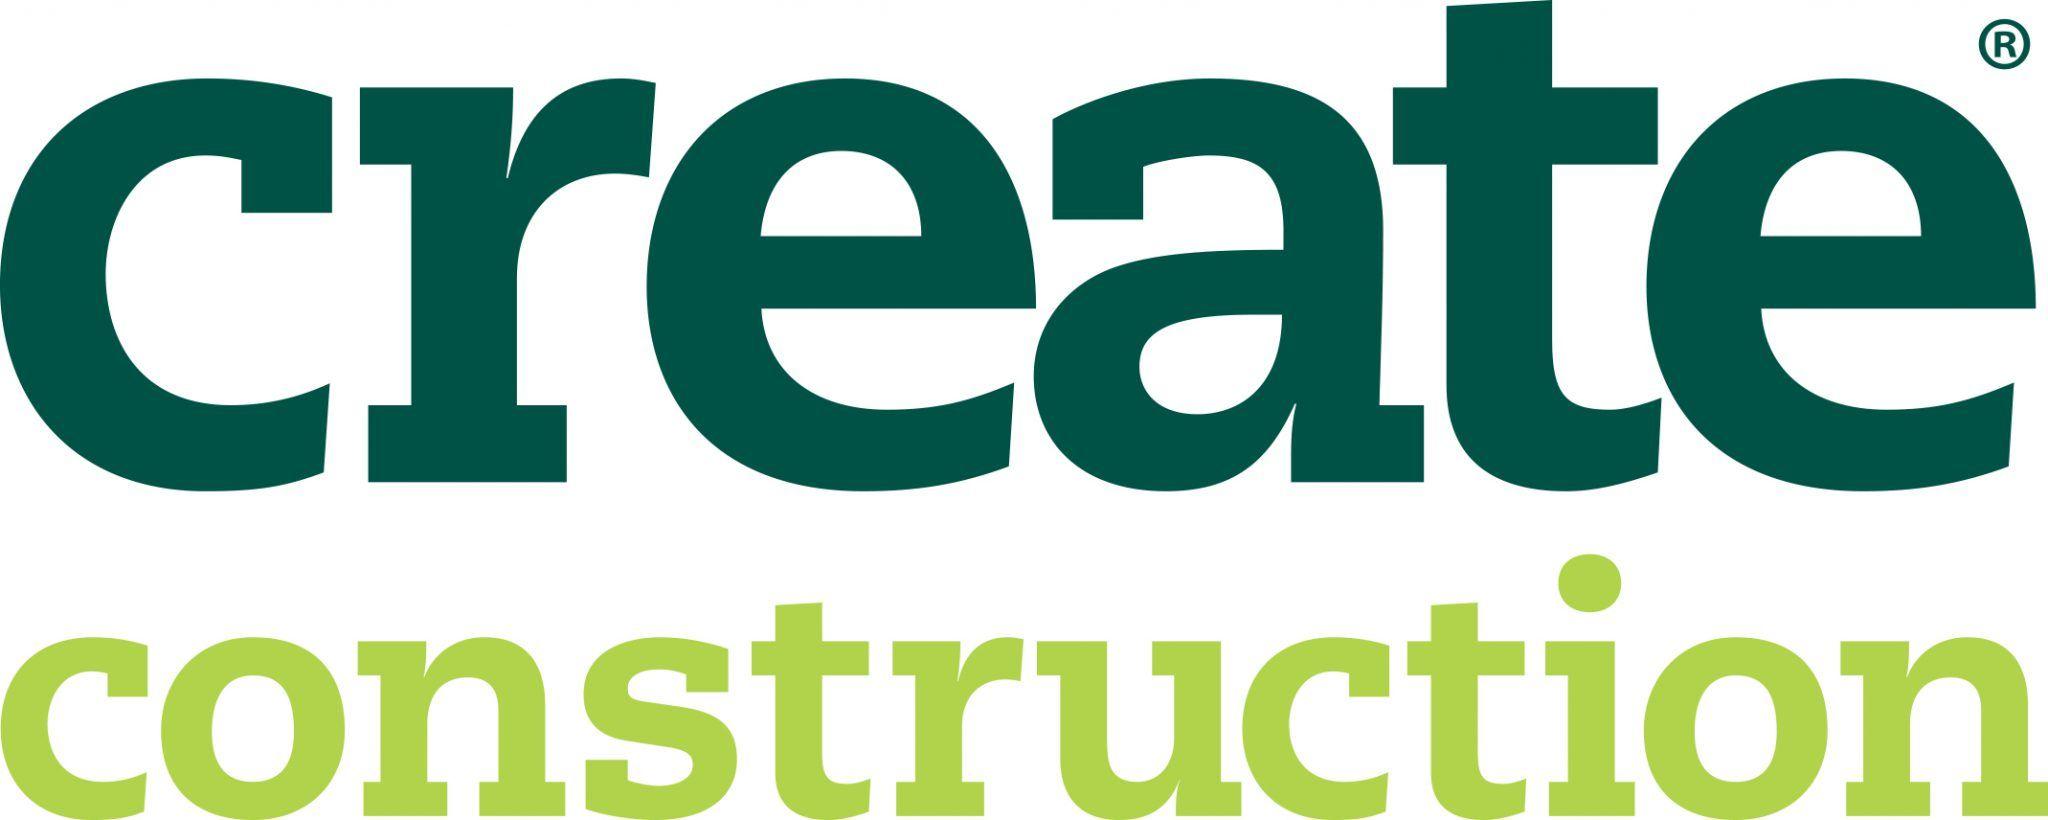 Create Construction Logo - Create Construction – Constructing Excellence